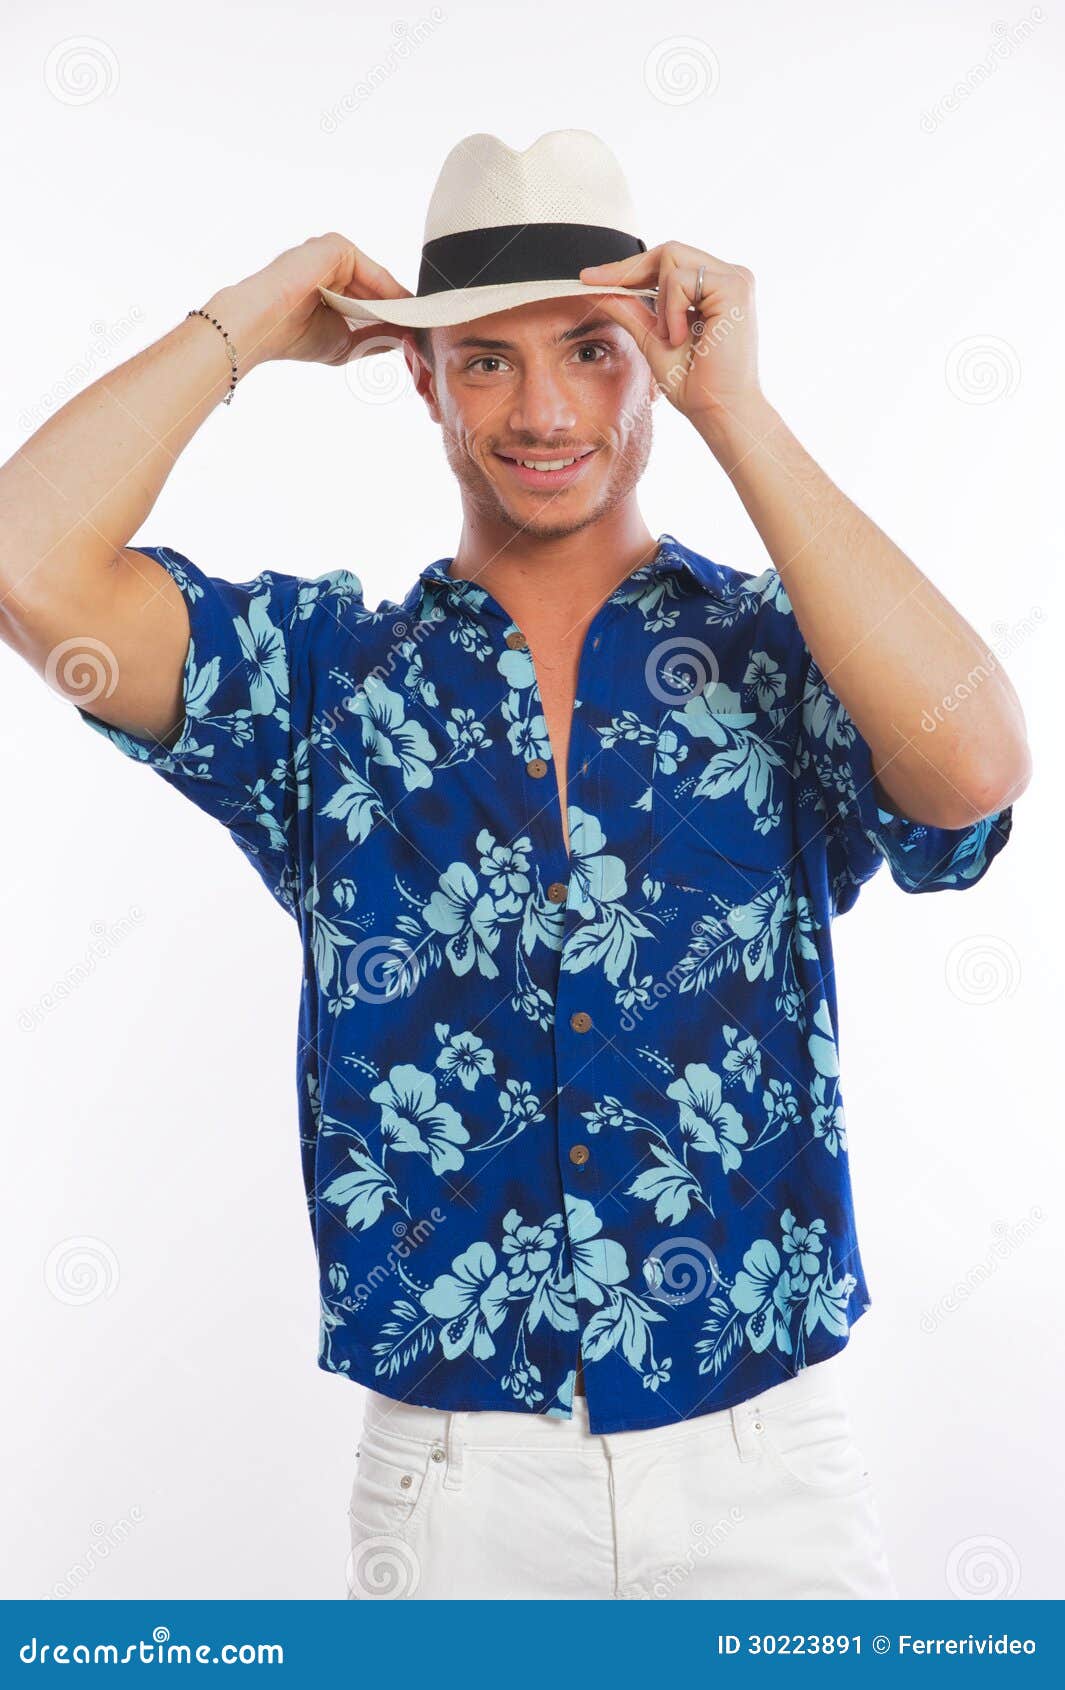 Hawaiian shirt stock image. Image of travel, person, looking - 30223891